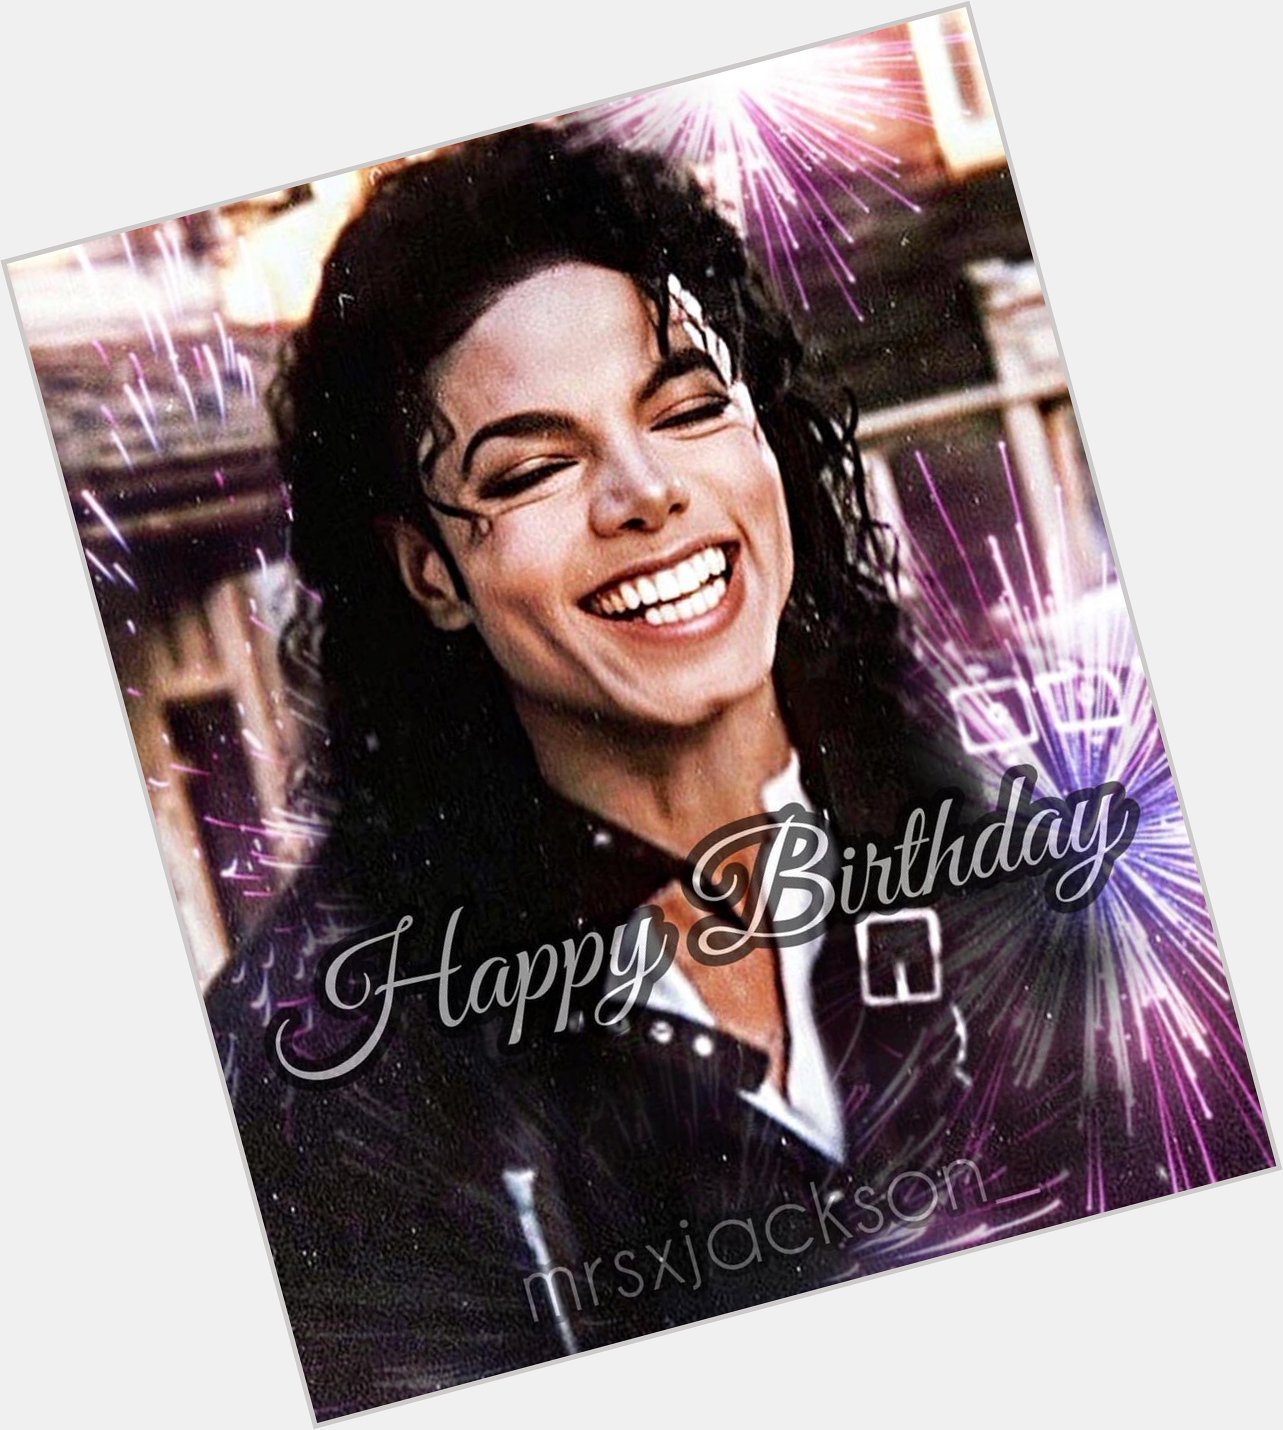 Happy birthday to Michael Jackson the king of pop love u more mJ                               